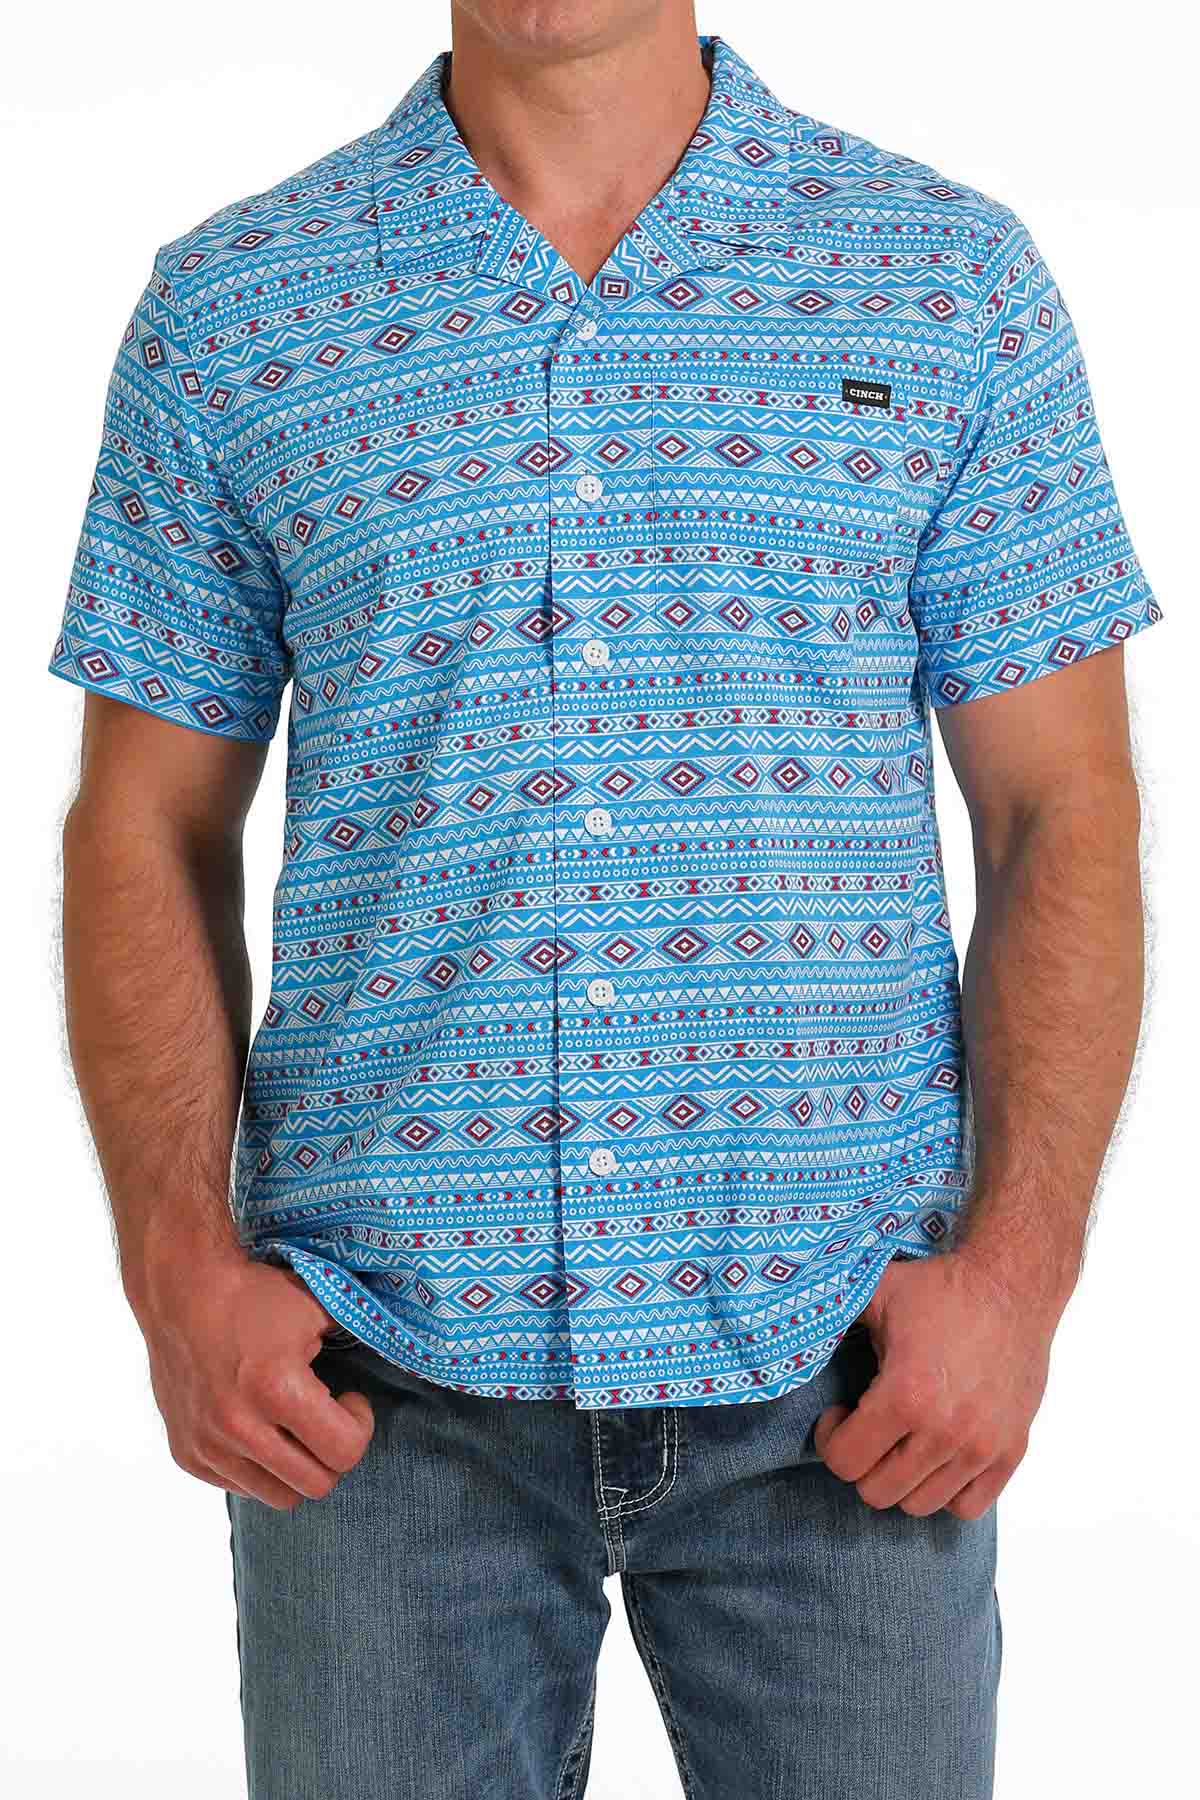 Cinch Men's Short-Sleeve Geo Print Camp Shirt in Turquoise Multi